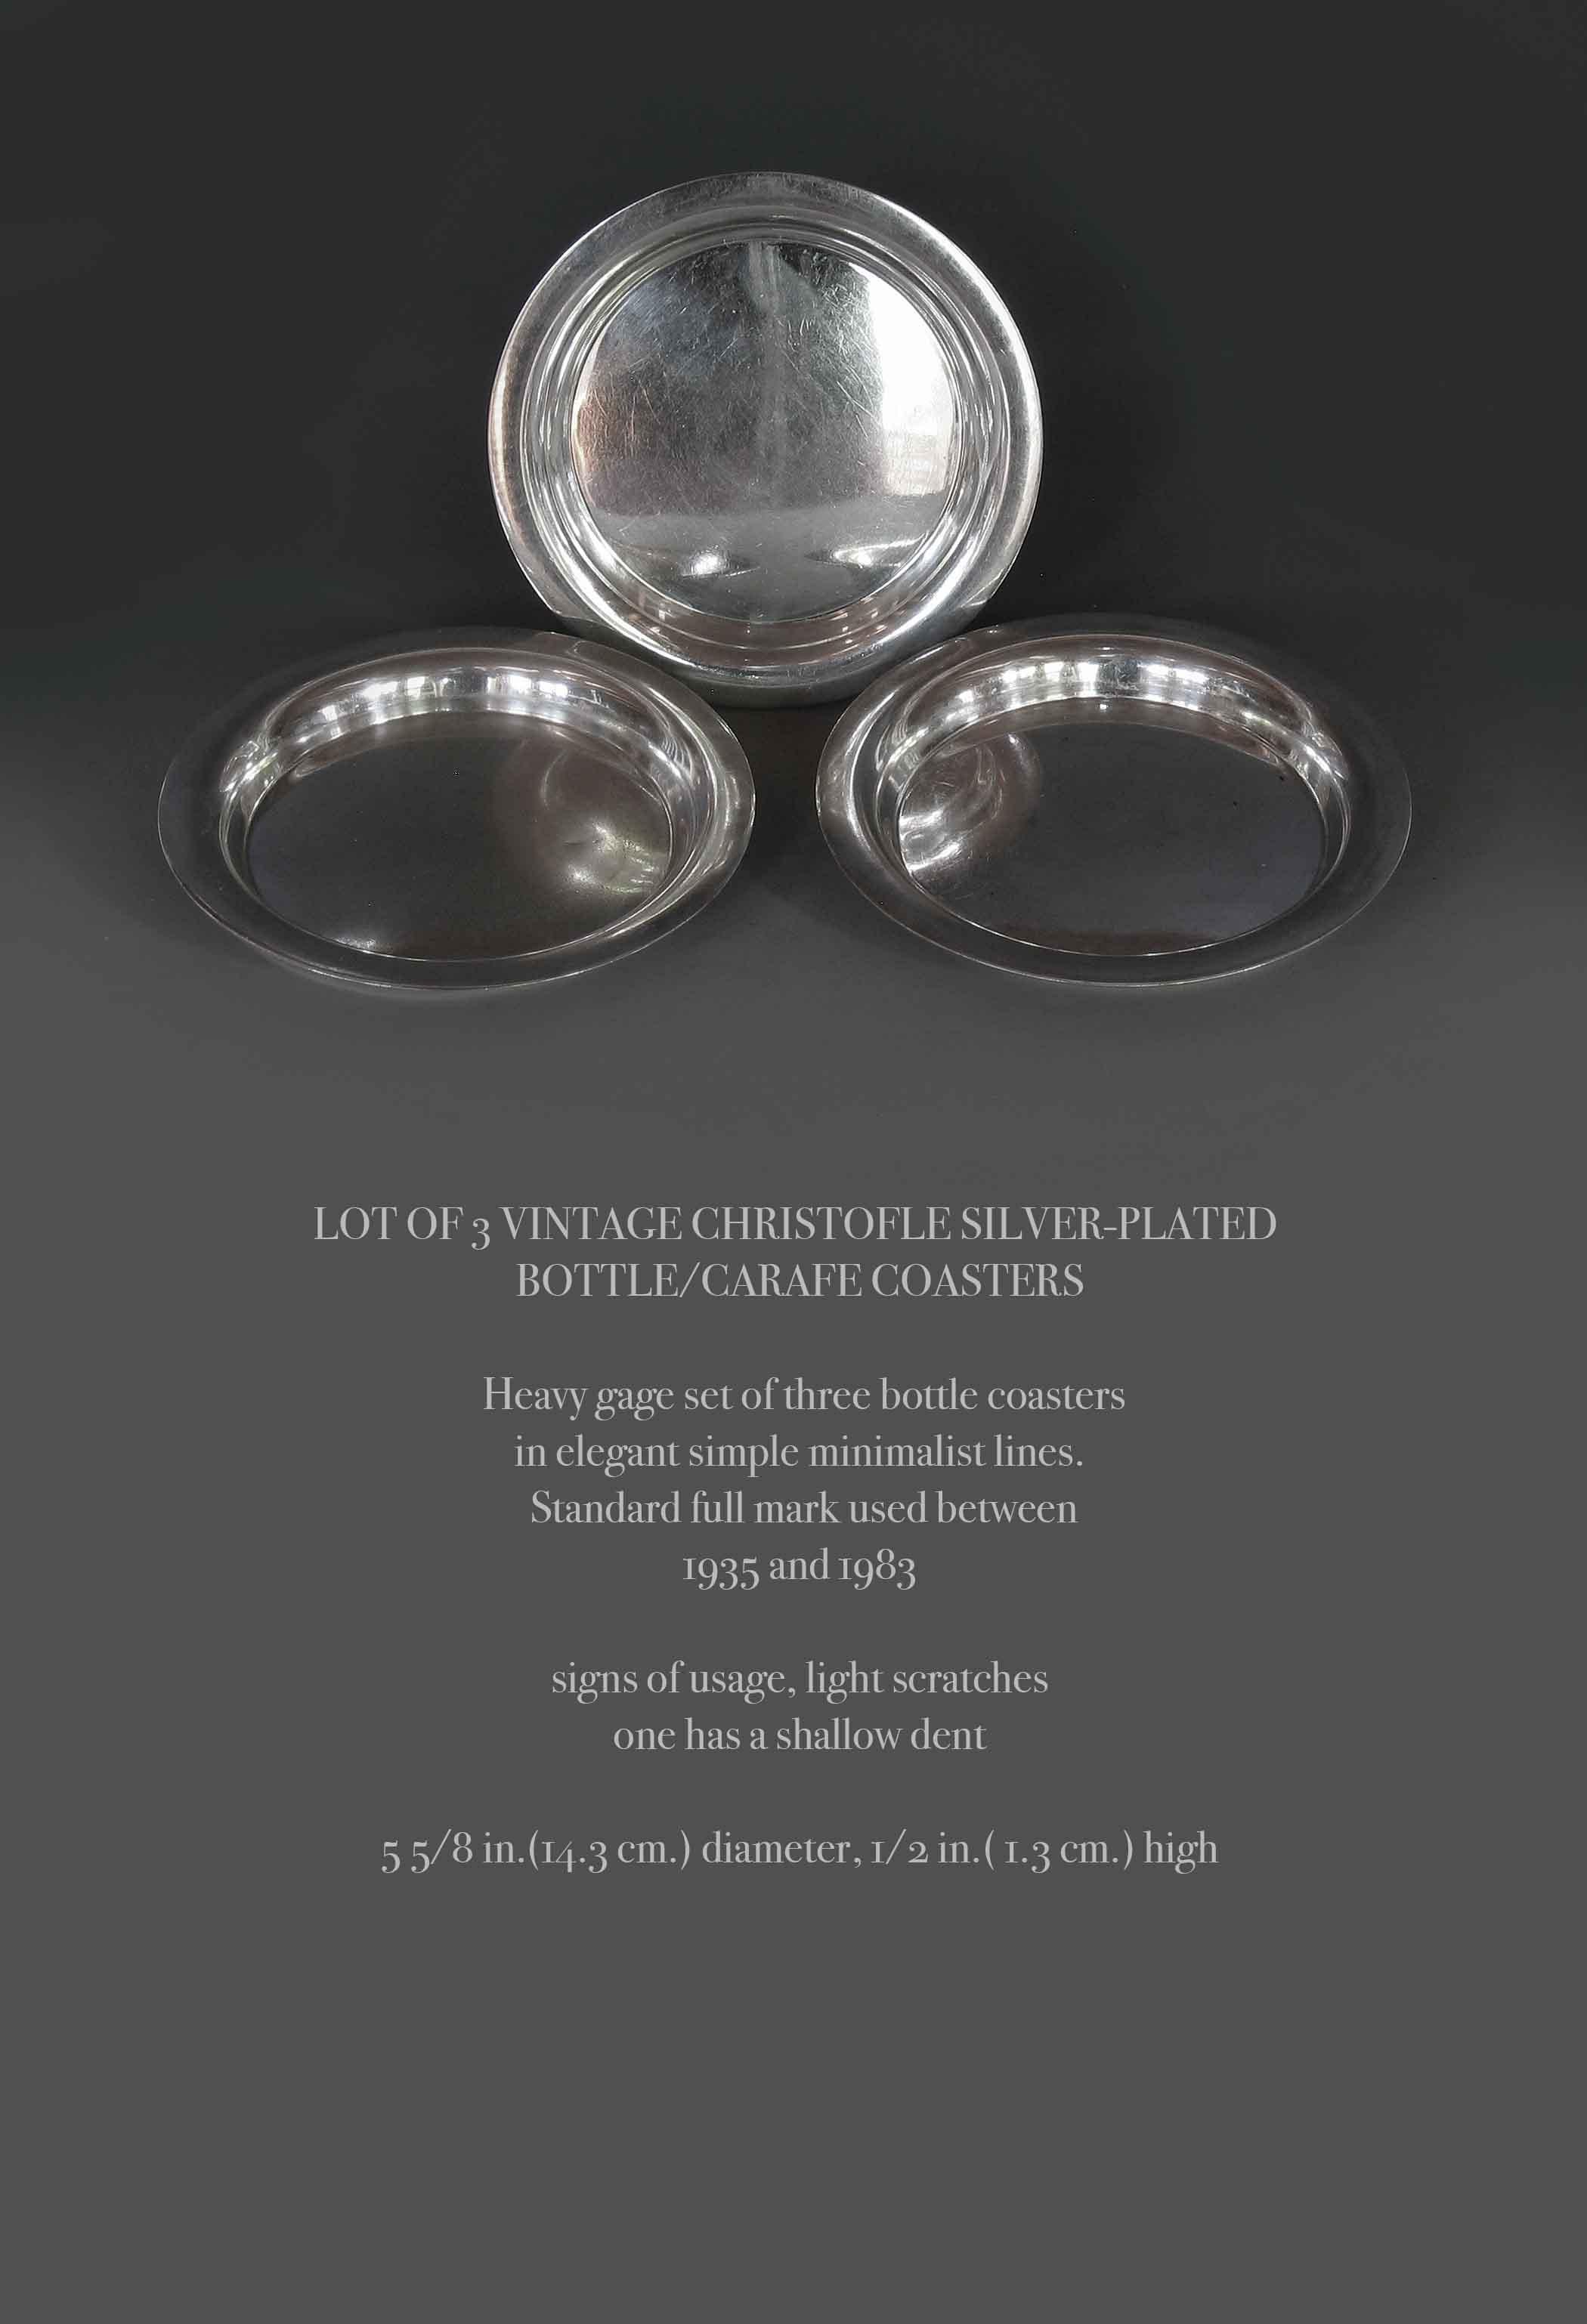 Lot of 3 Vintage Christofle Silver-Plated Bottle/Carafe Coasters For Sale 2